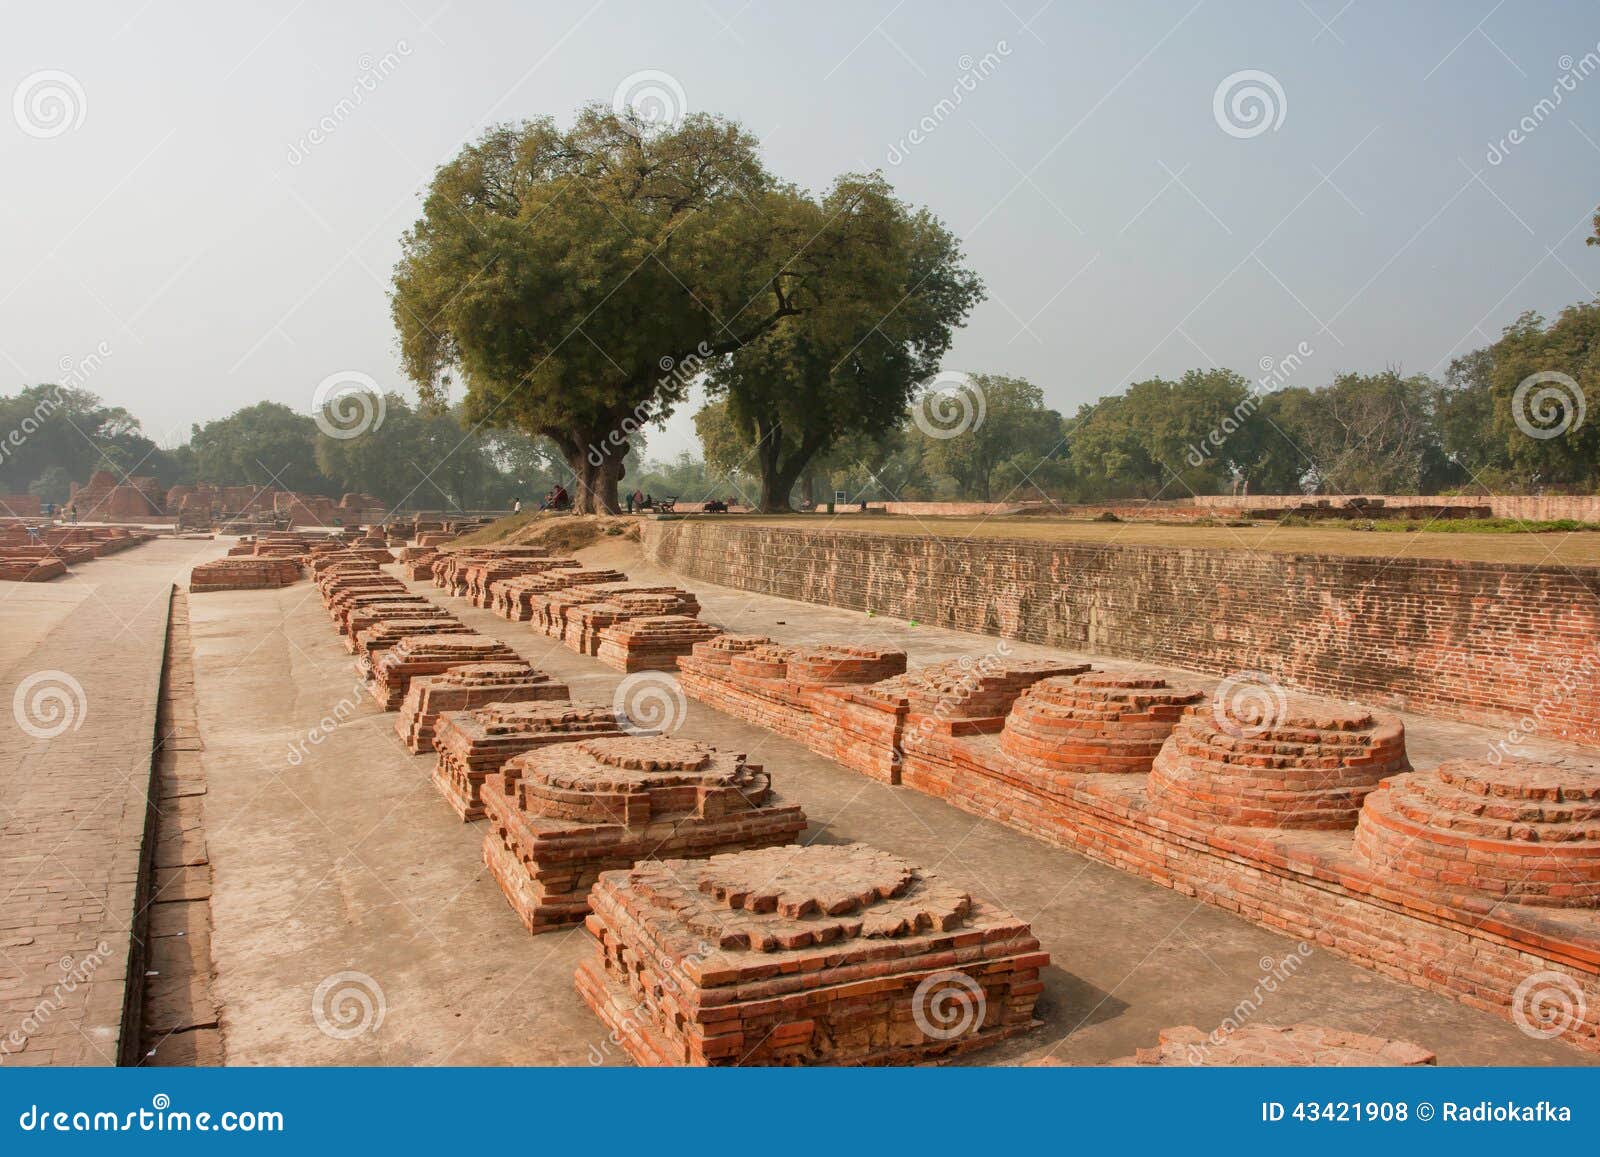 long-alley-brick-monuments-archeological-site-ruins-buddhist-monastery-sarnath-india-sarnath-where-gautama-43421908.jpg